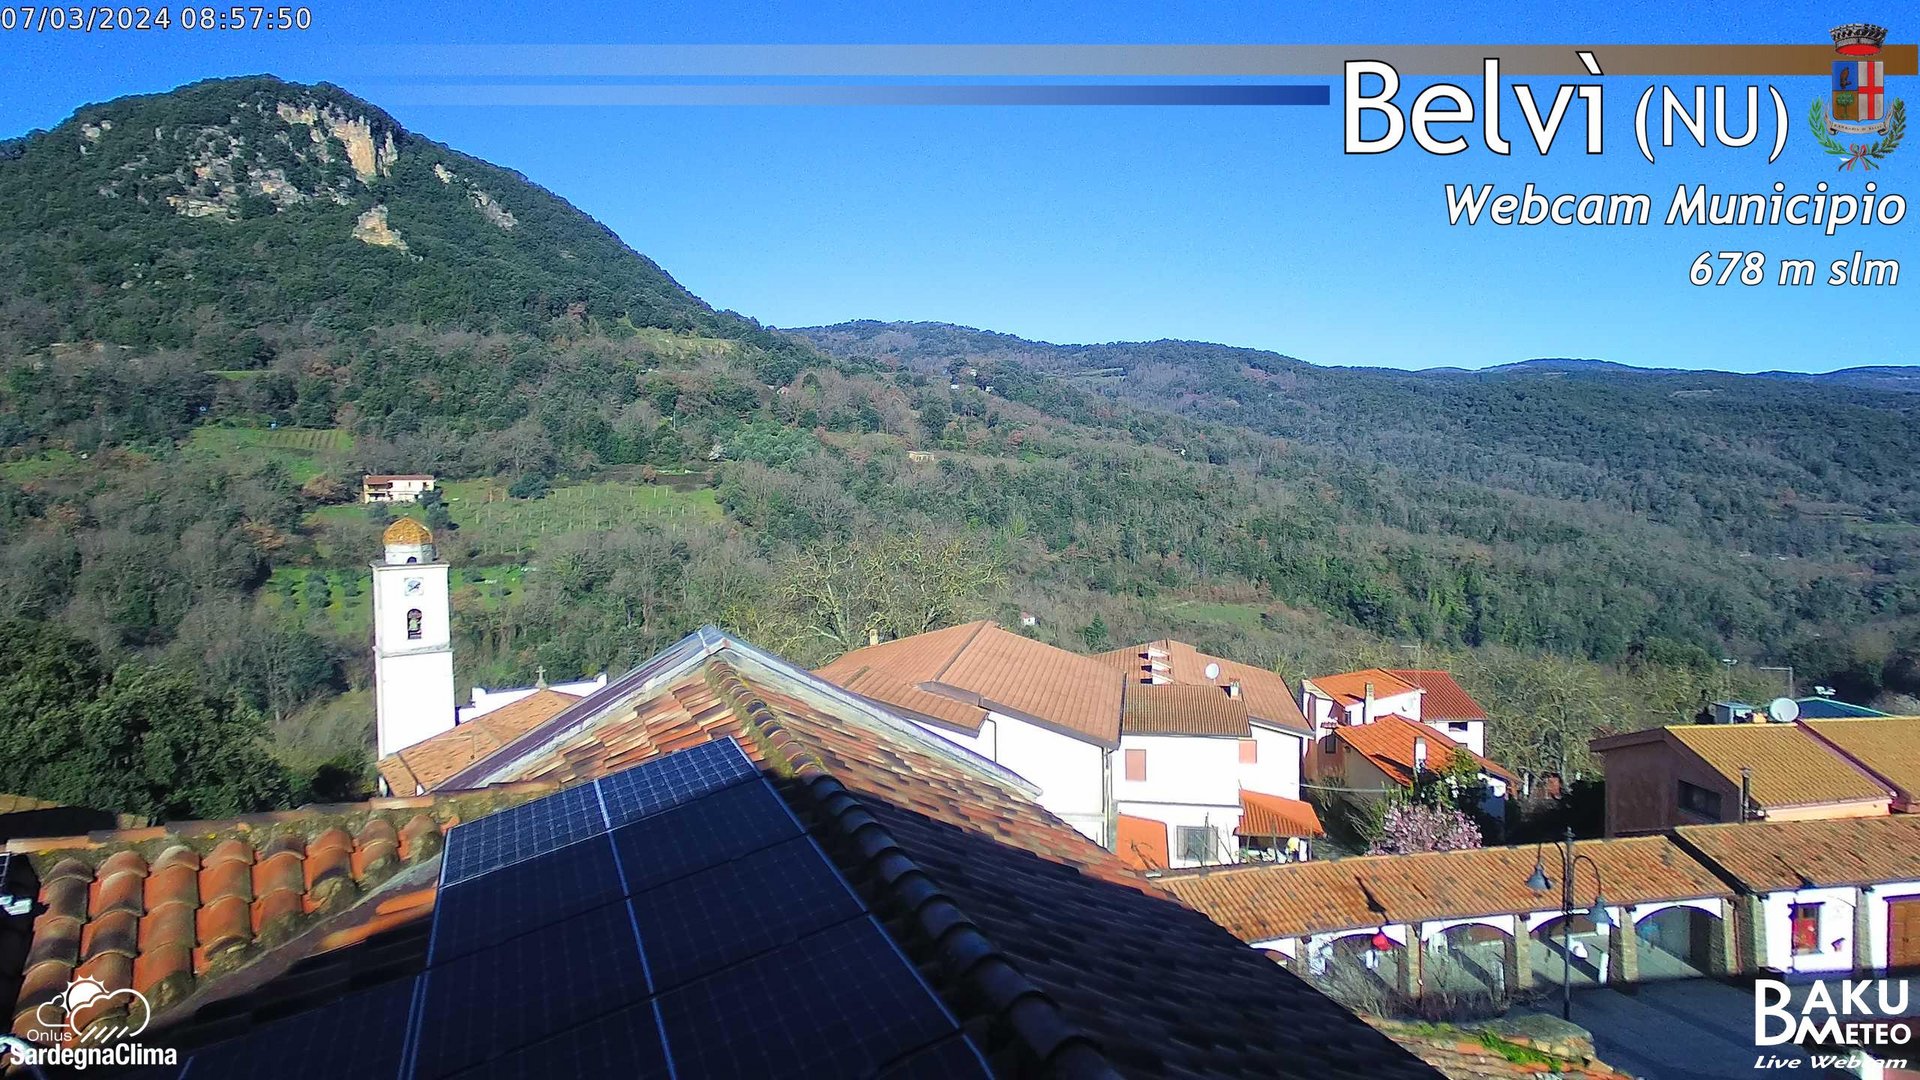 time-lapse frame, Belvi Municipio webcam